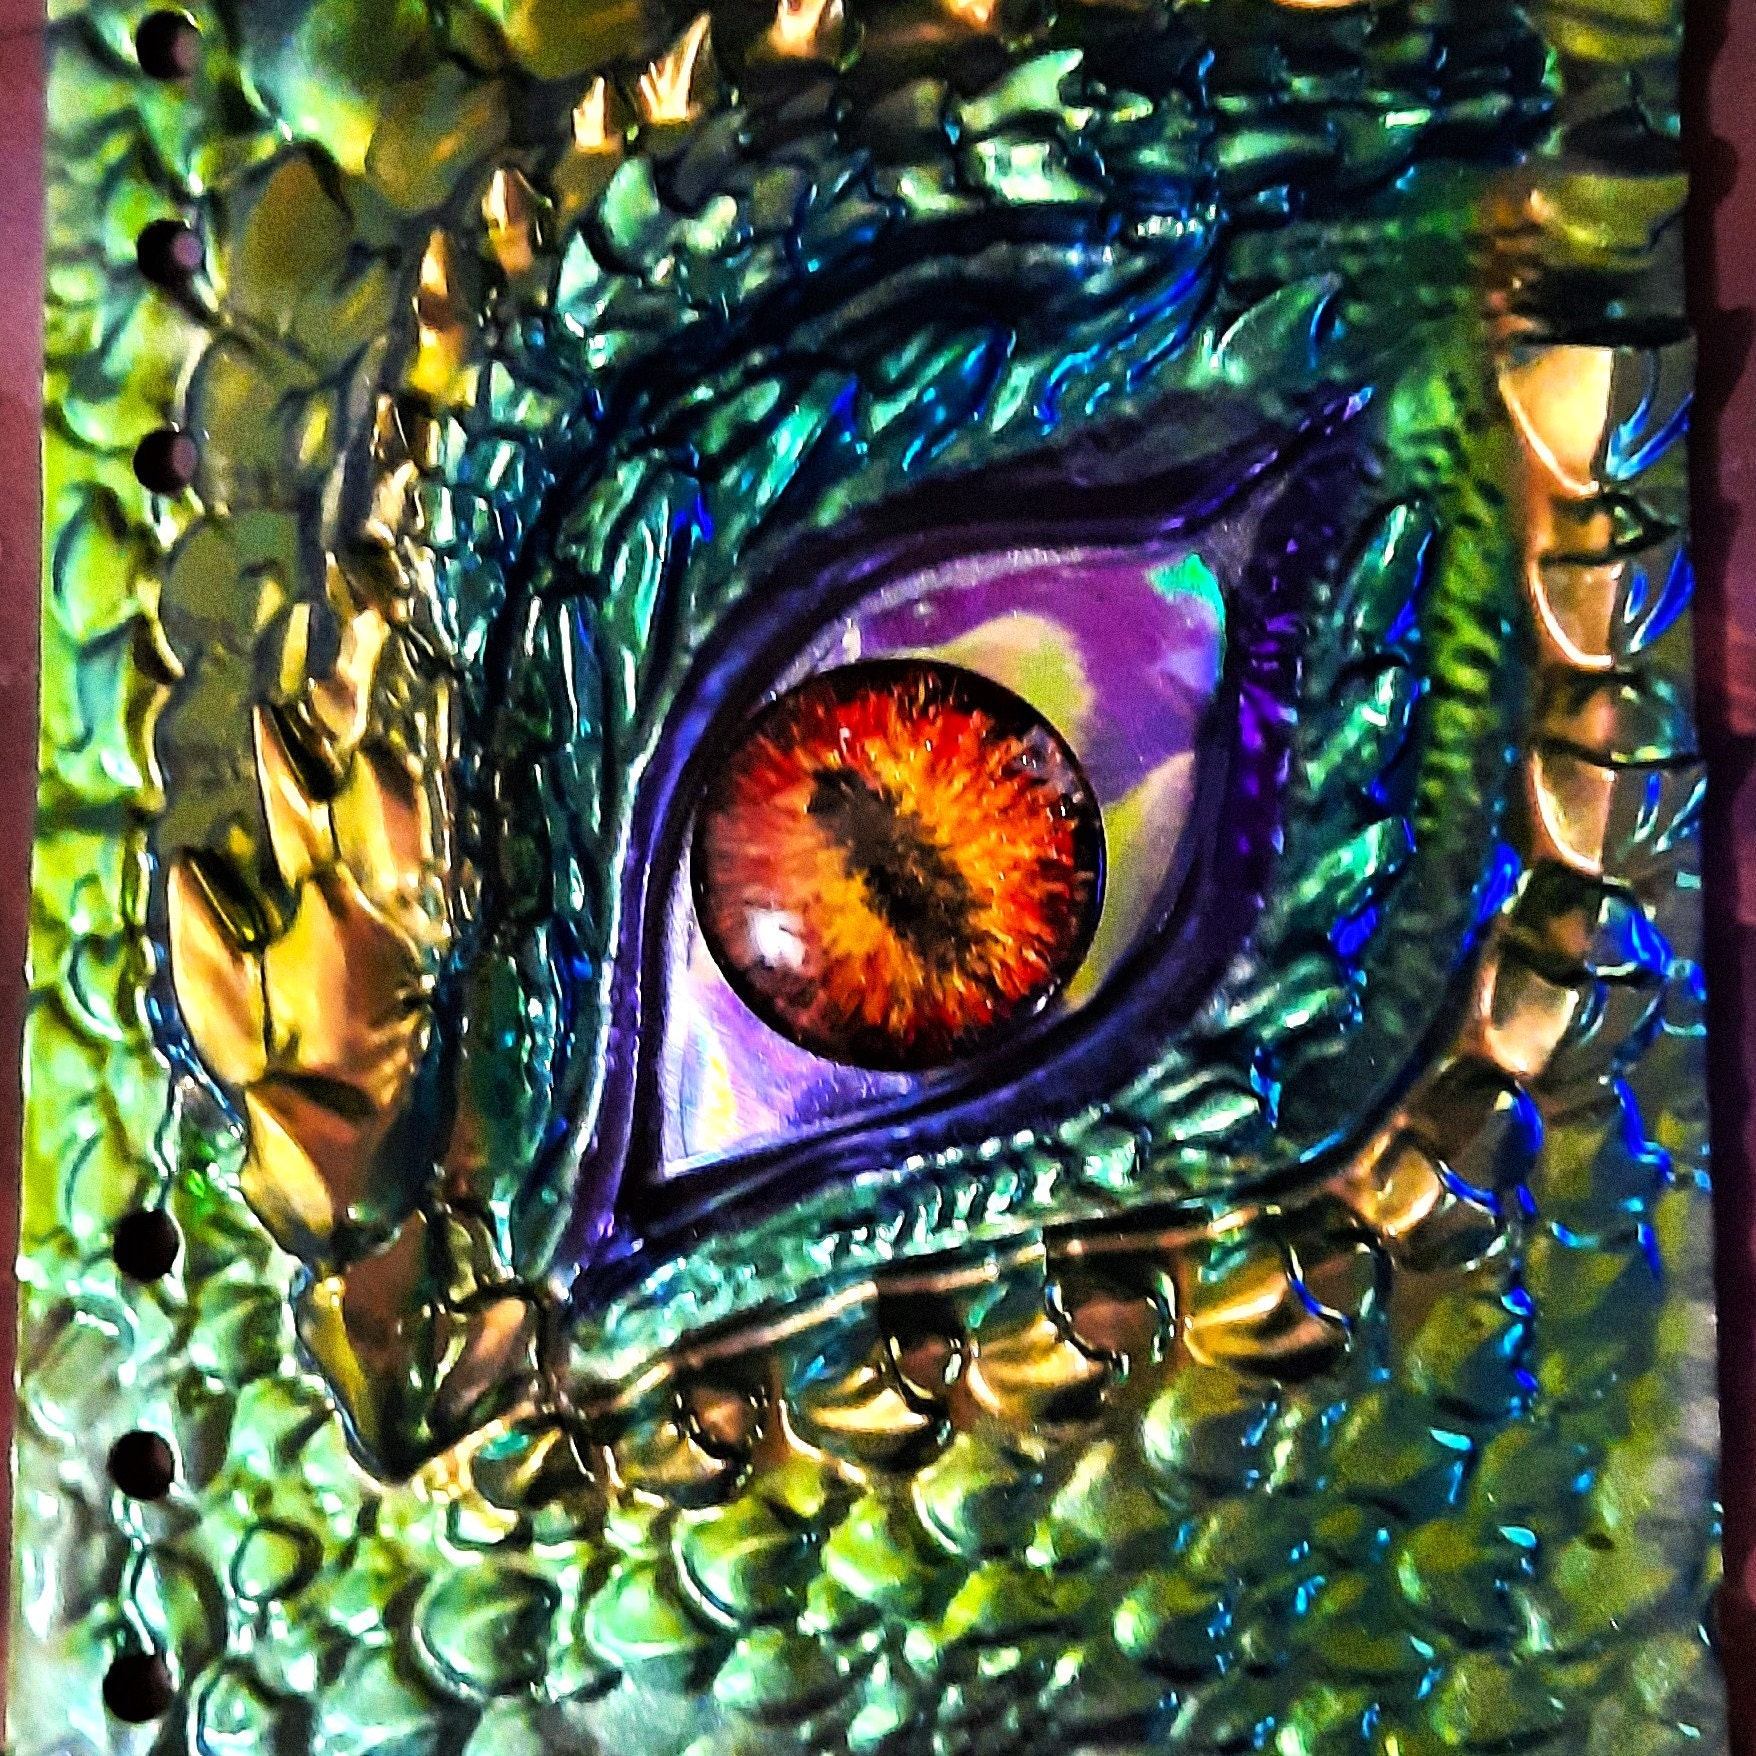 Dragon Eye Sublimation 4 Coaster Set. Beautiful, Vibrant Dragon Coasters  With Cork Backing. 